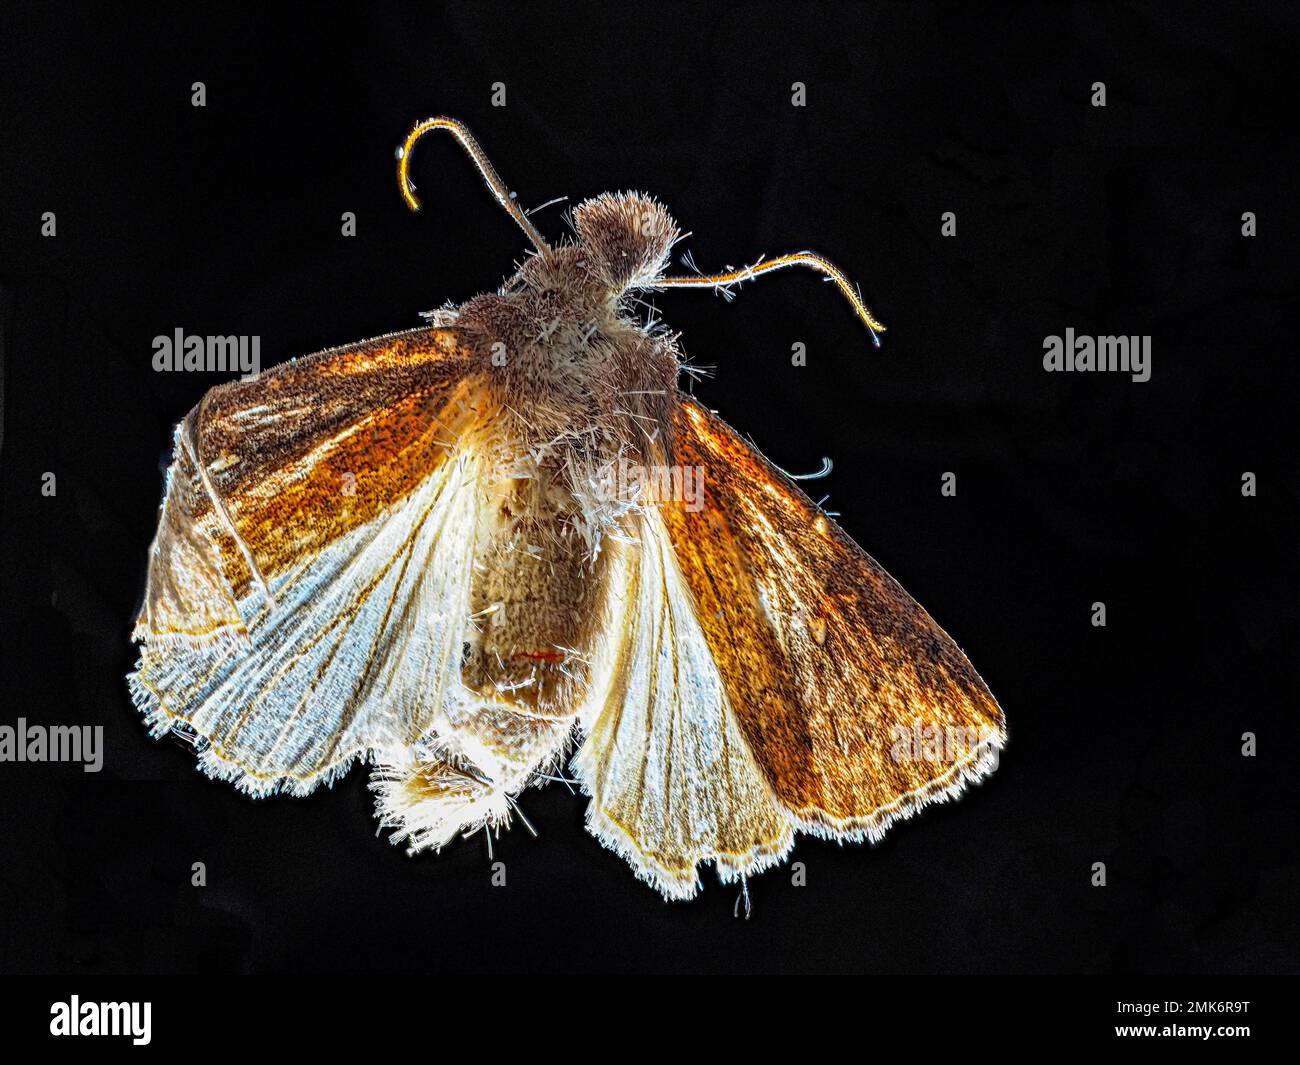 Moth, macro close-up, dark background, Germany Stock Photo